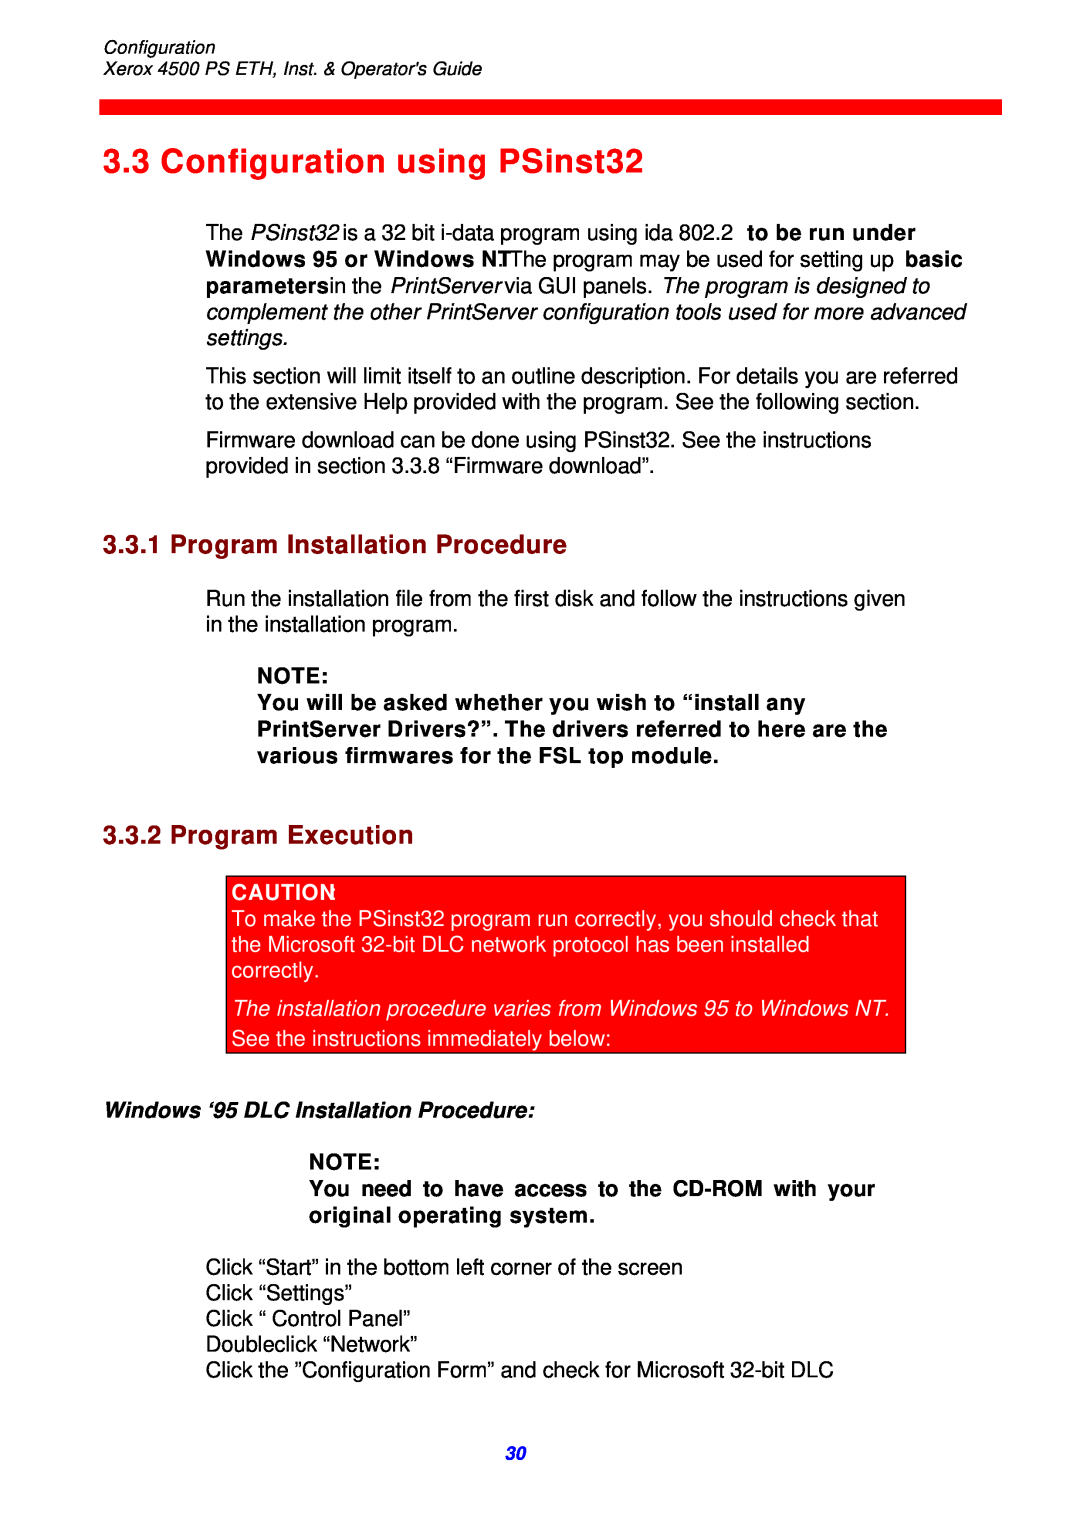 Xerox 4500 ps eth instruction manual Configuration using PSinst32, Program Installation Procedure, Program Execution 